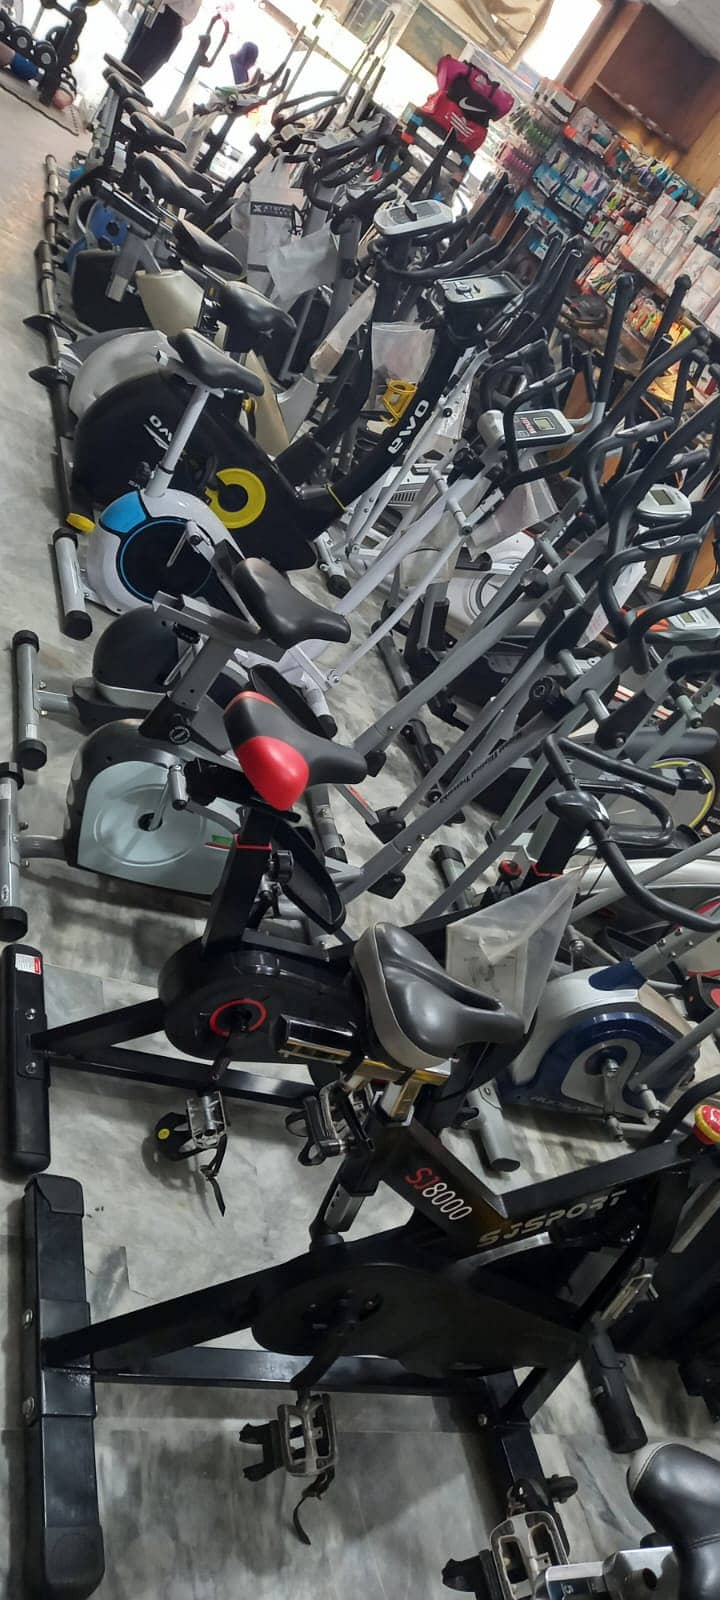 Cardio fitness treadmill,elliptical,recumbent,cycle,spin bike,dumbbels 2